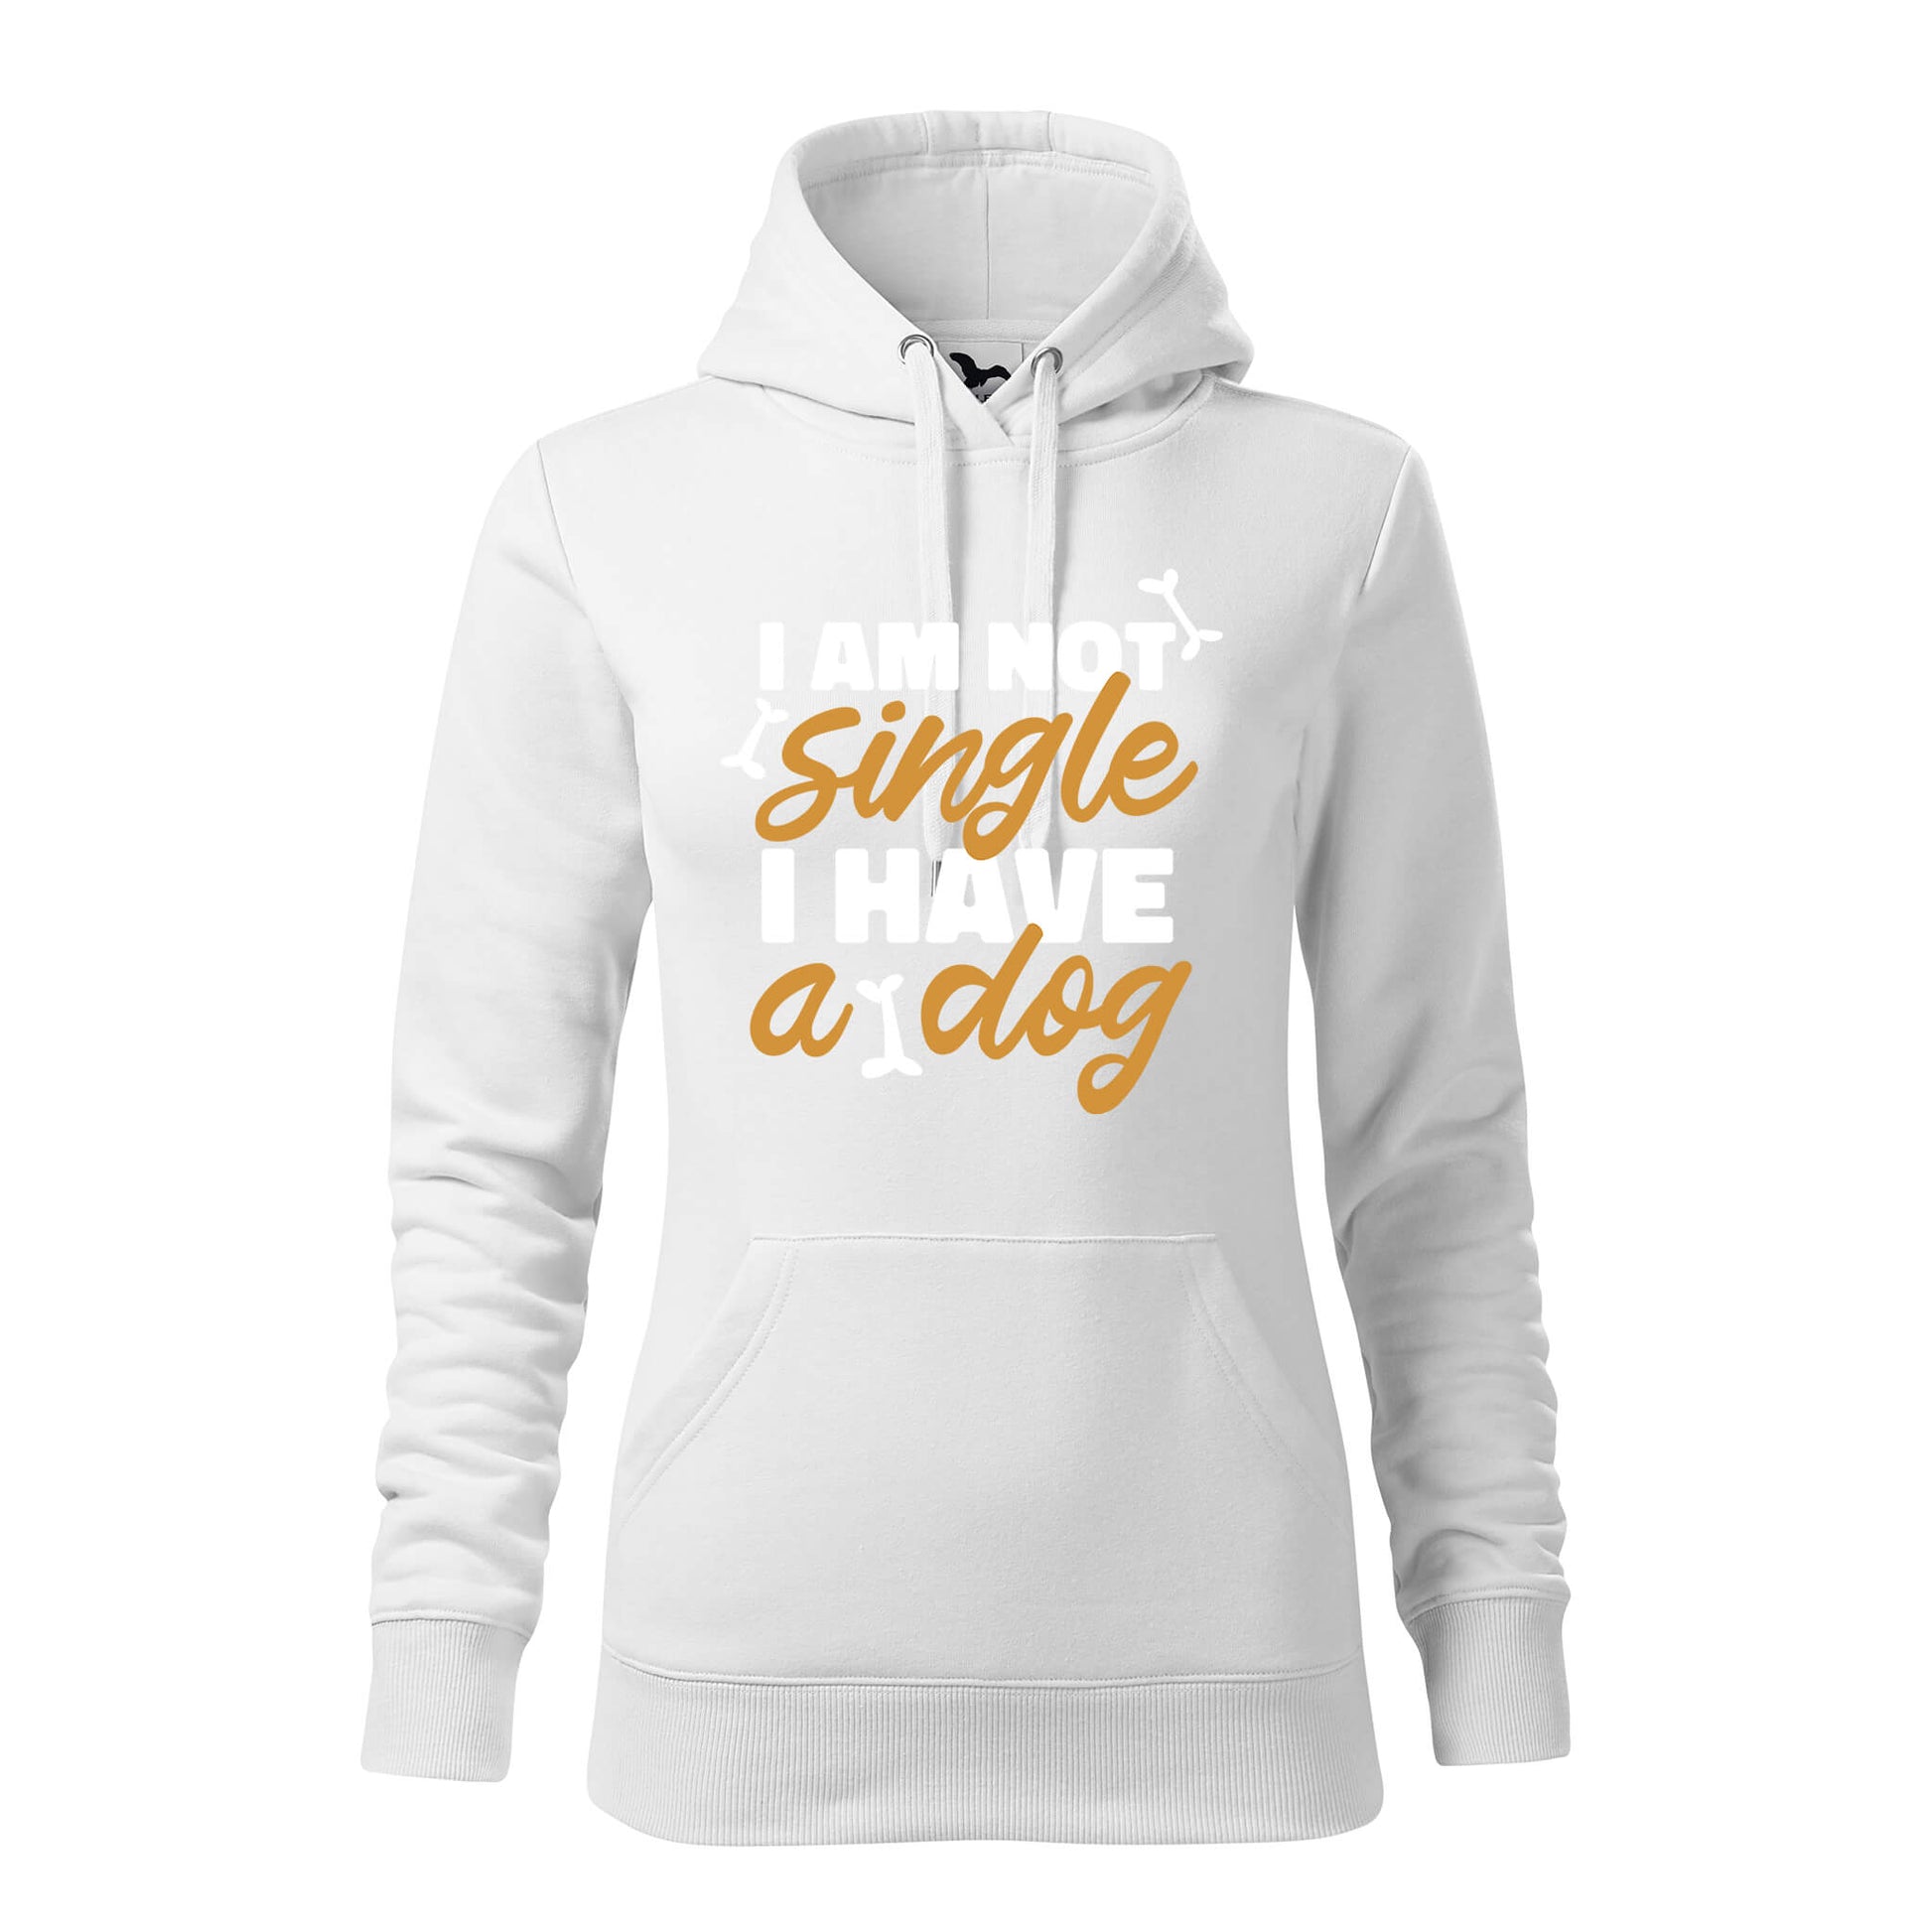 Im not single i have a dog hoodie - rvdesignprint